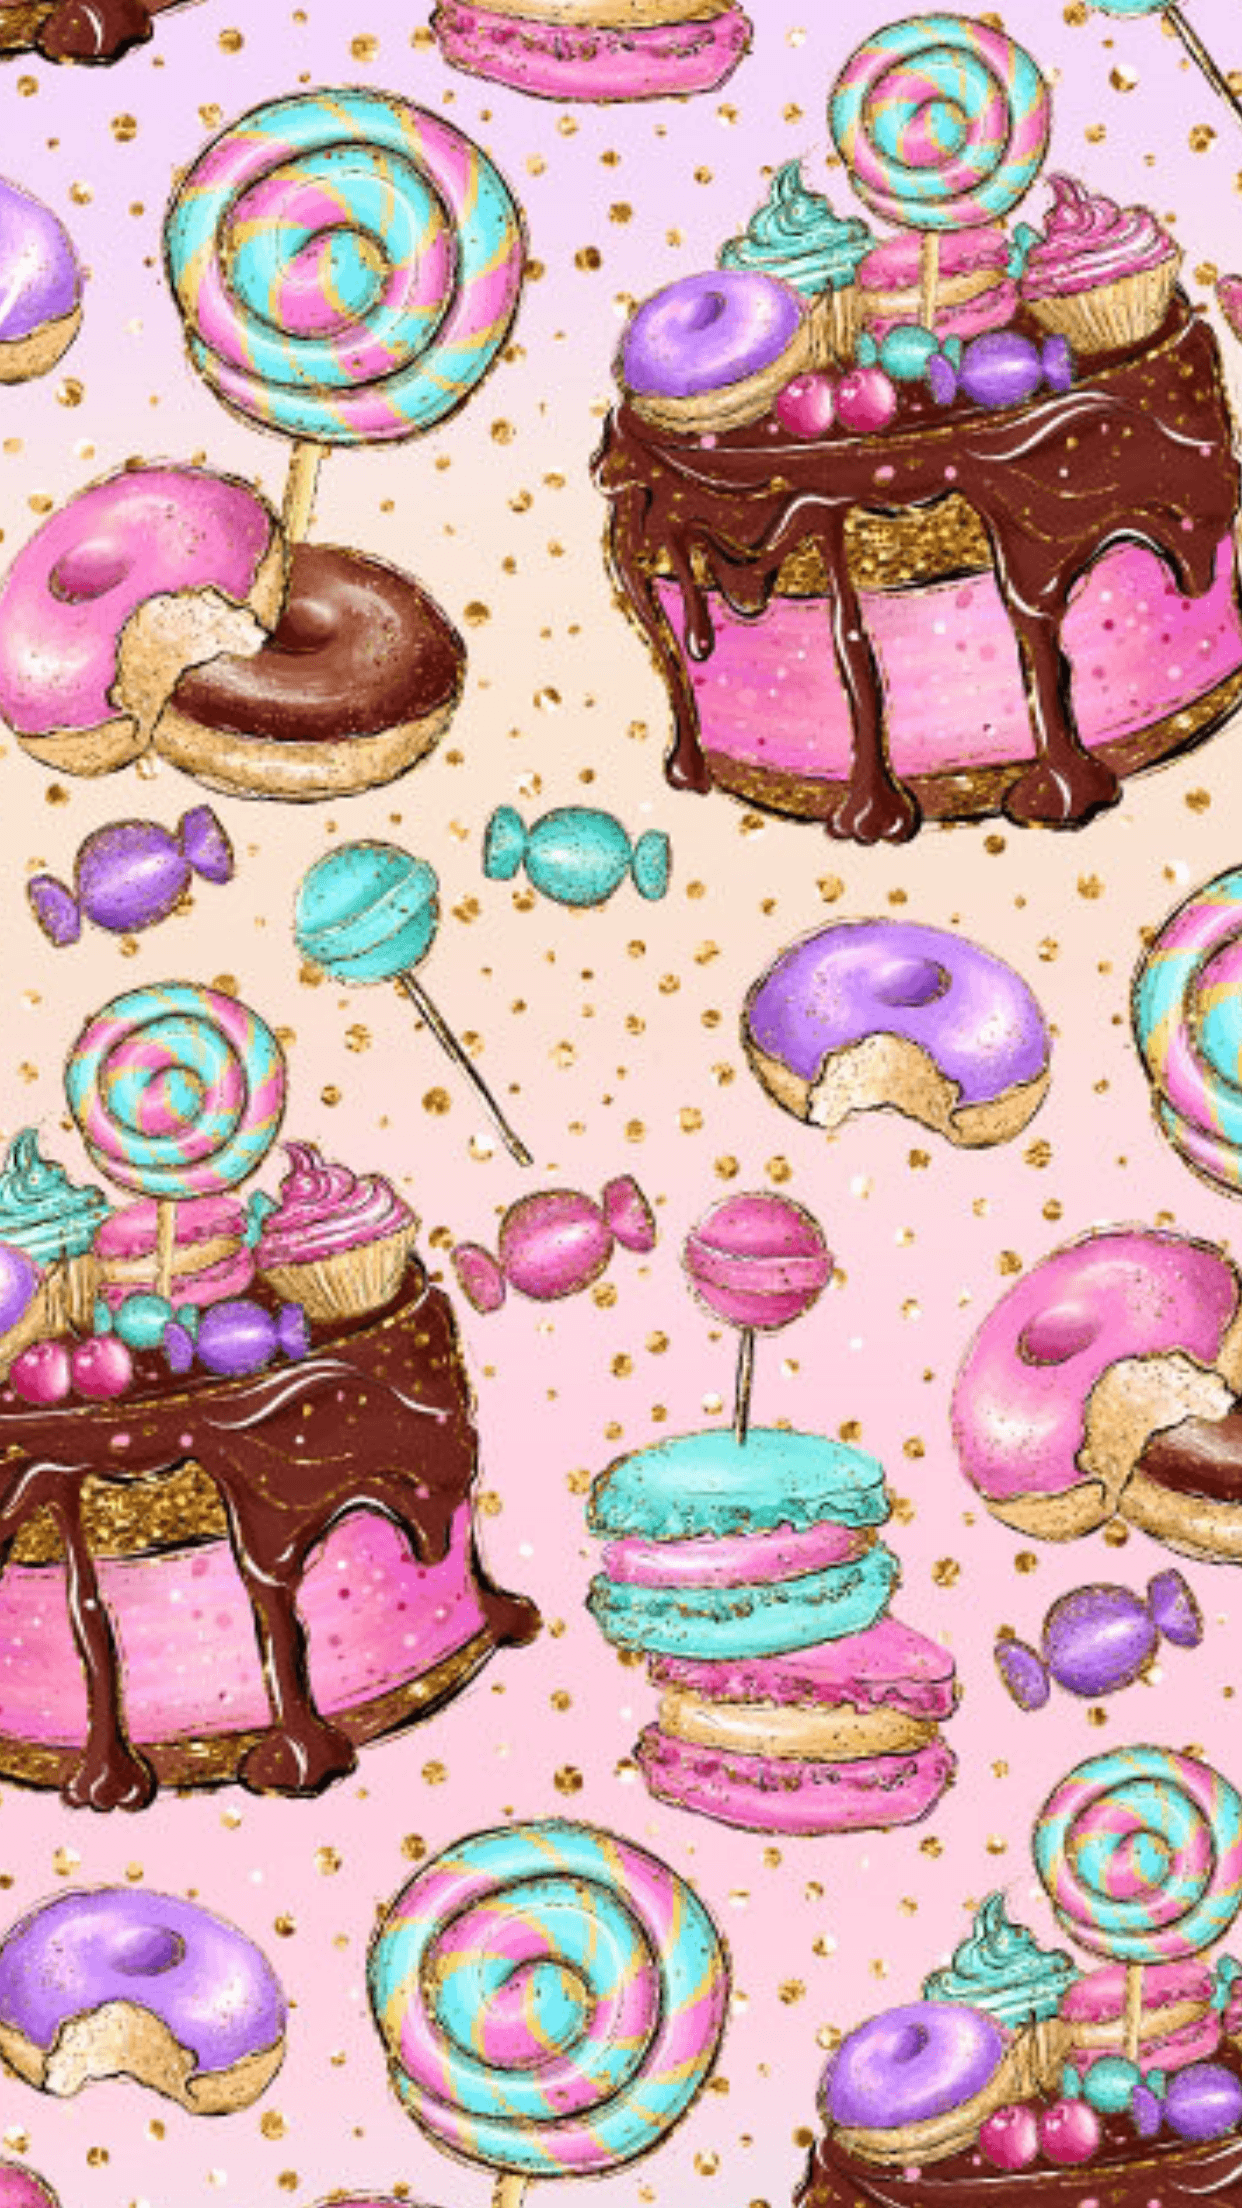 Desserts illustrations. Wallpaper